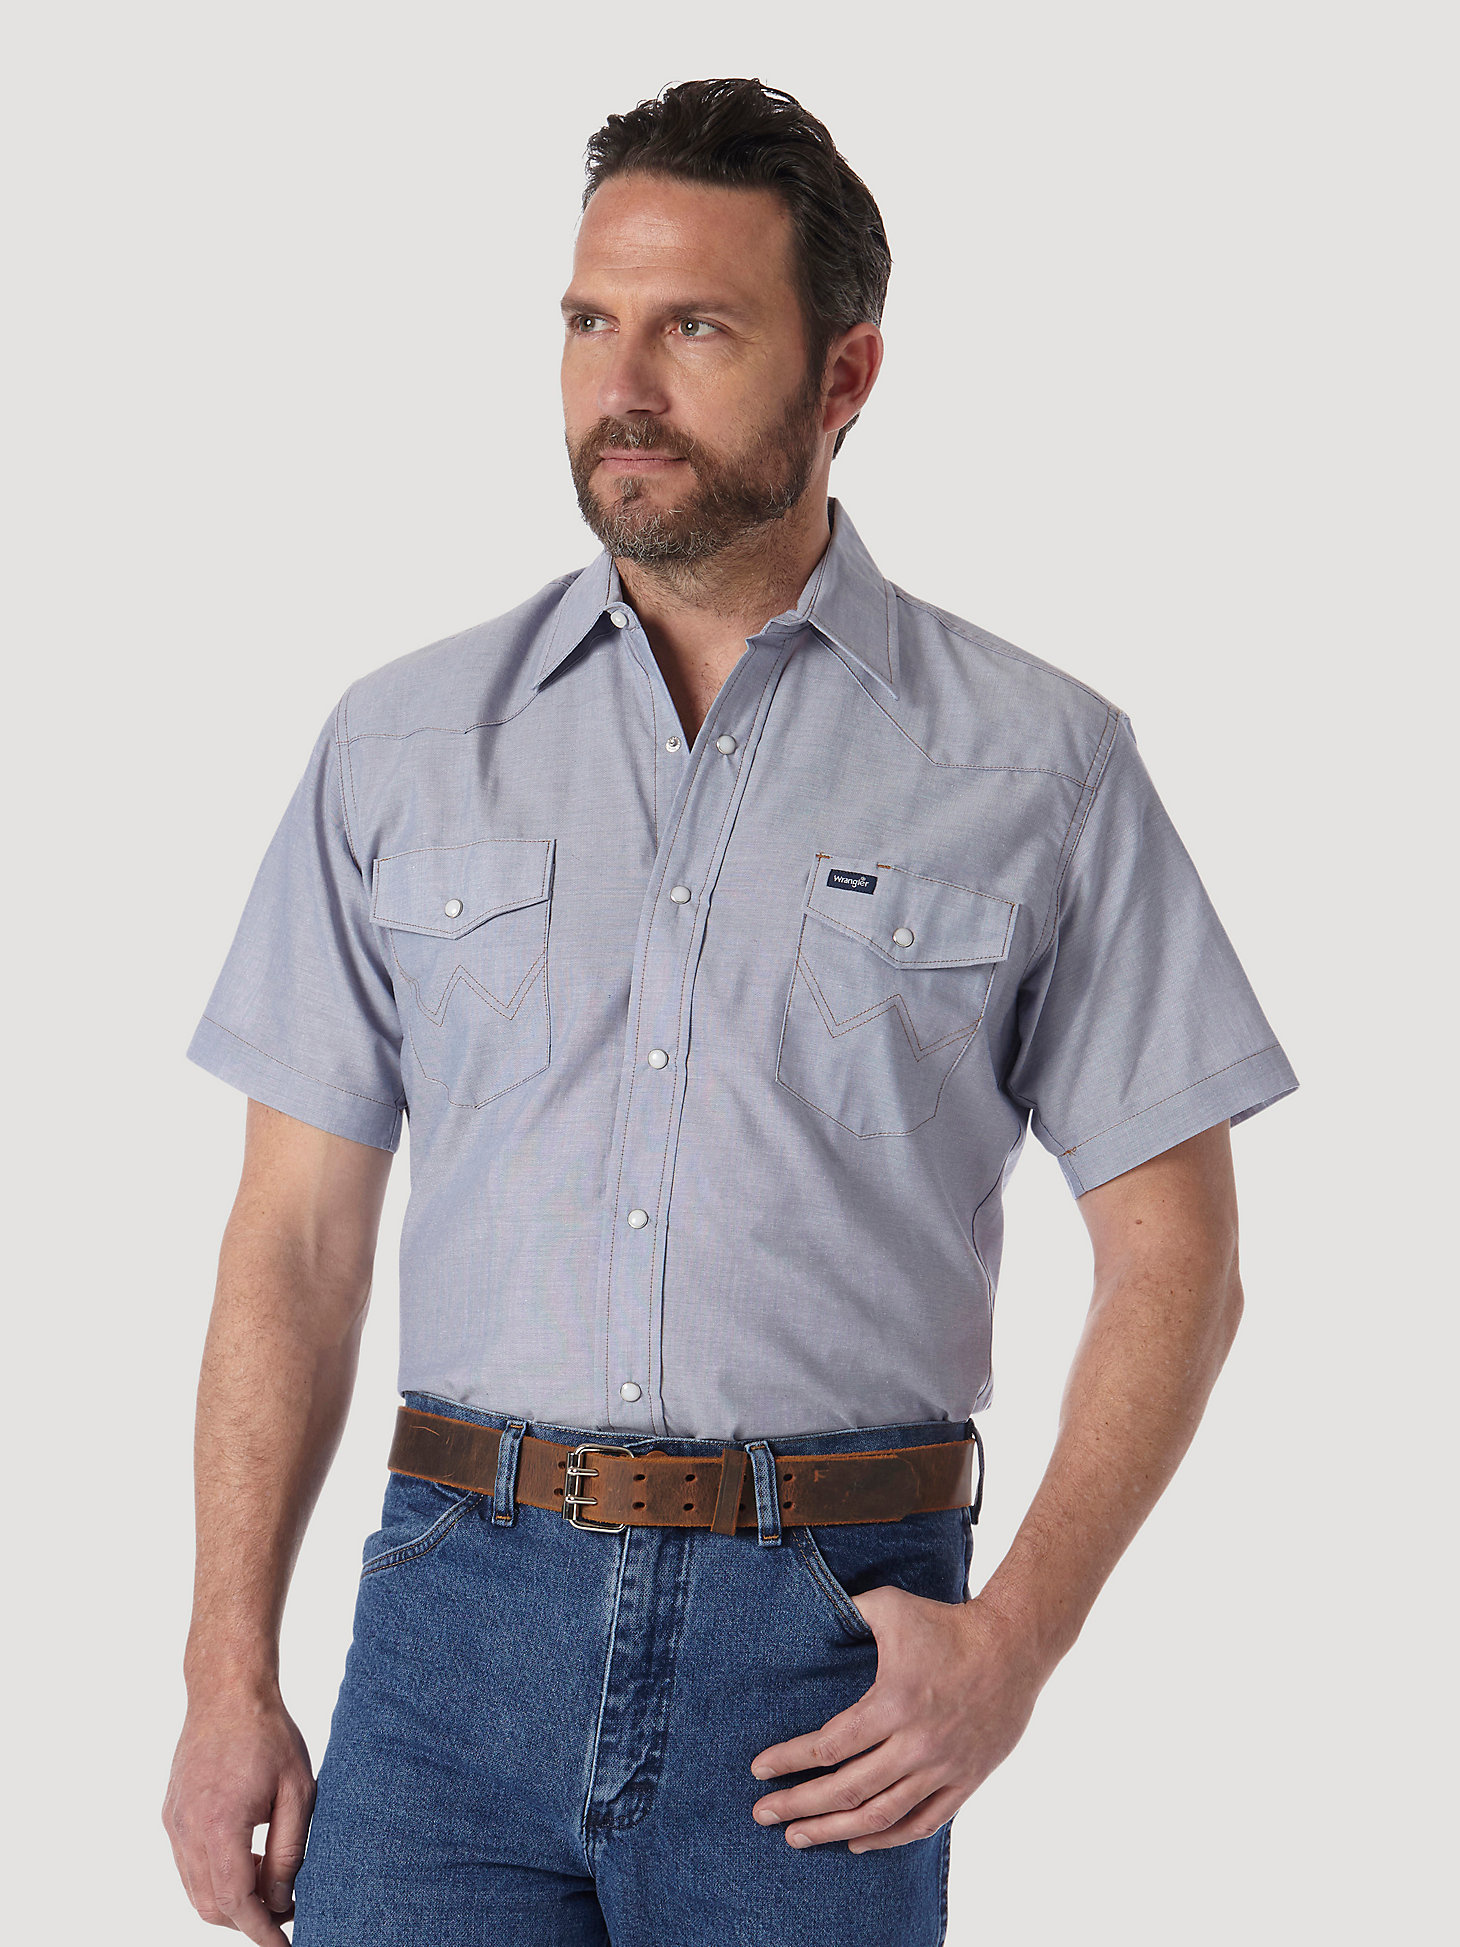 YYear Mens Summer Slim Fit Button Down Short Sleeve Pockets Denim Work Western Shirt